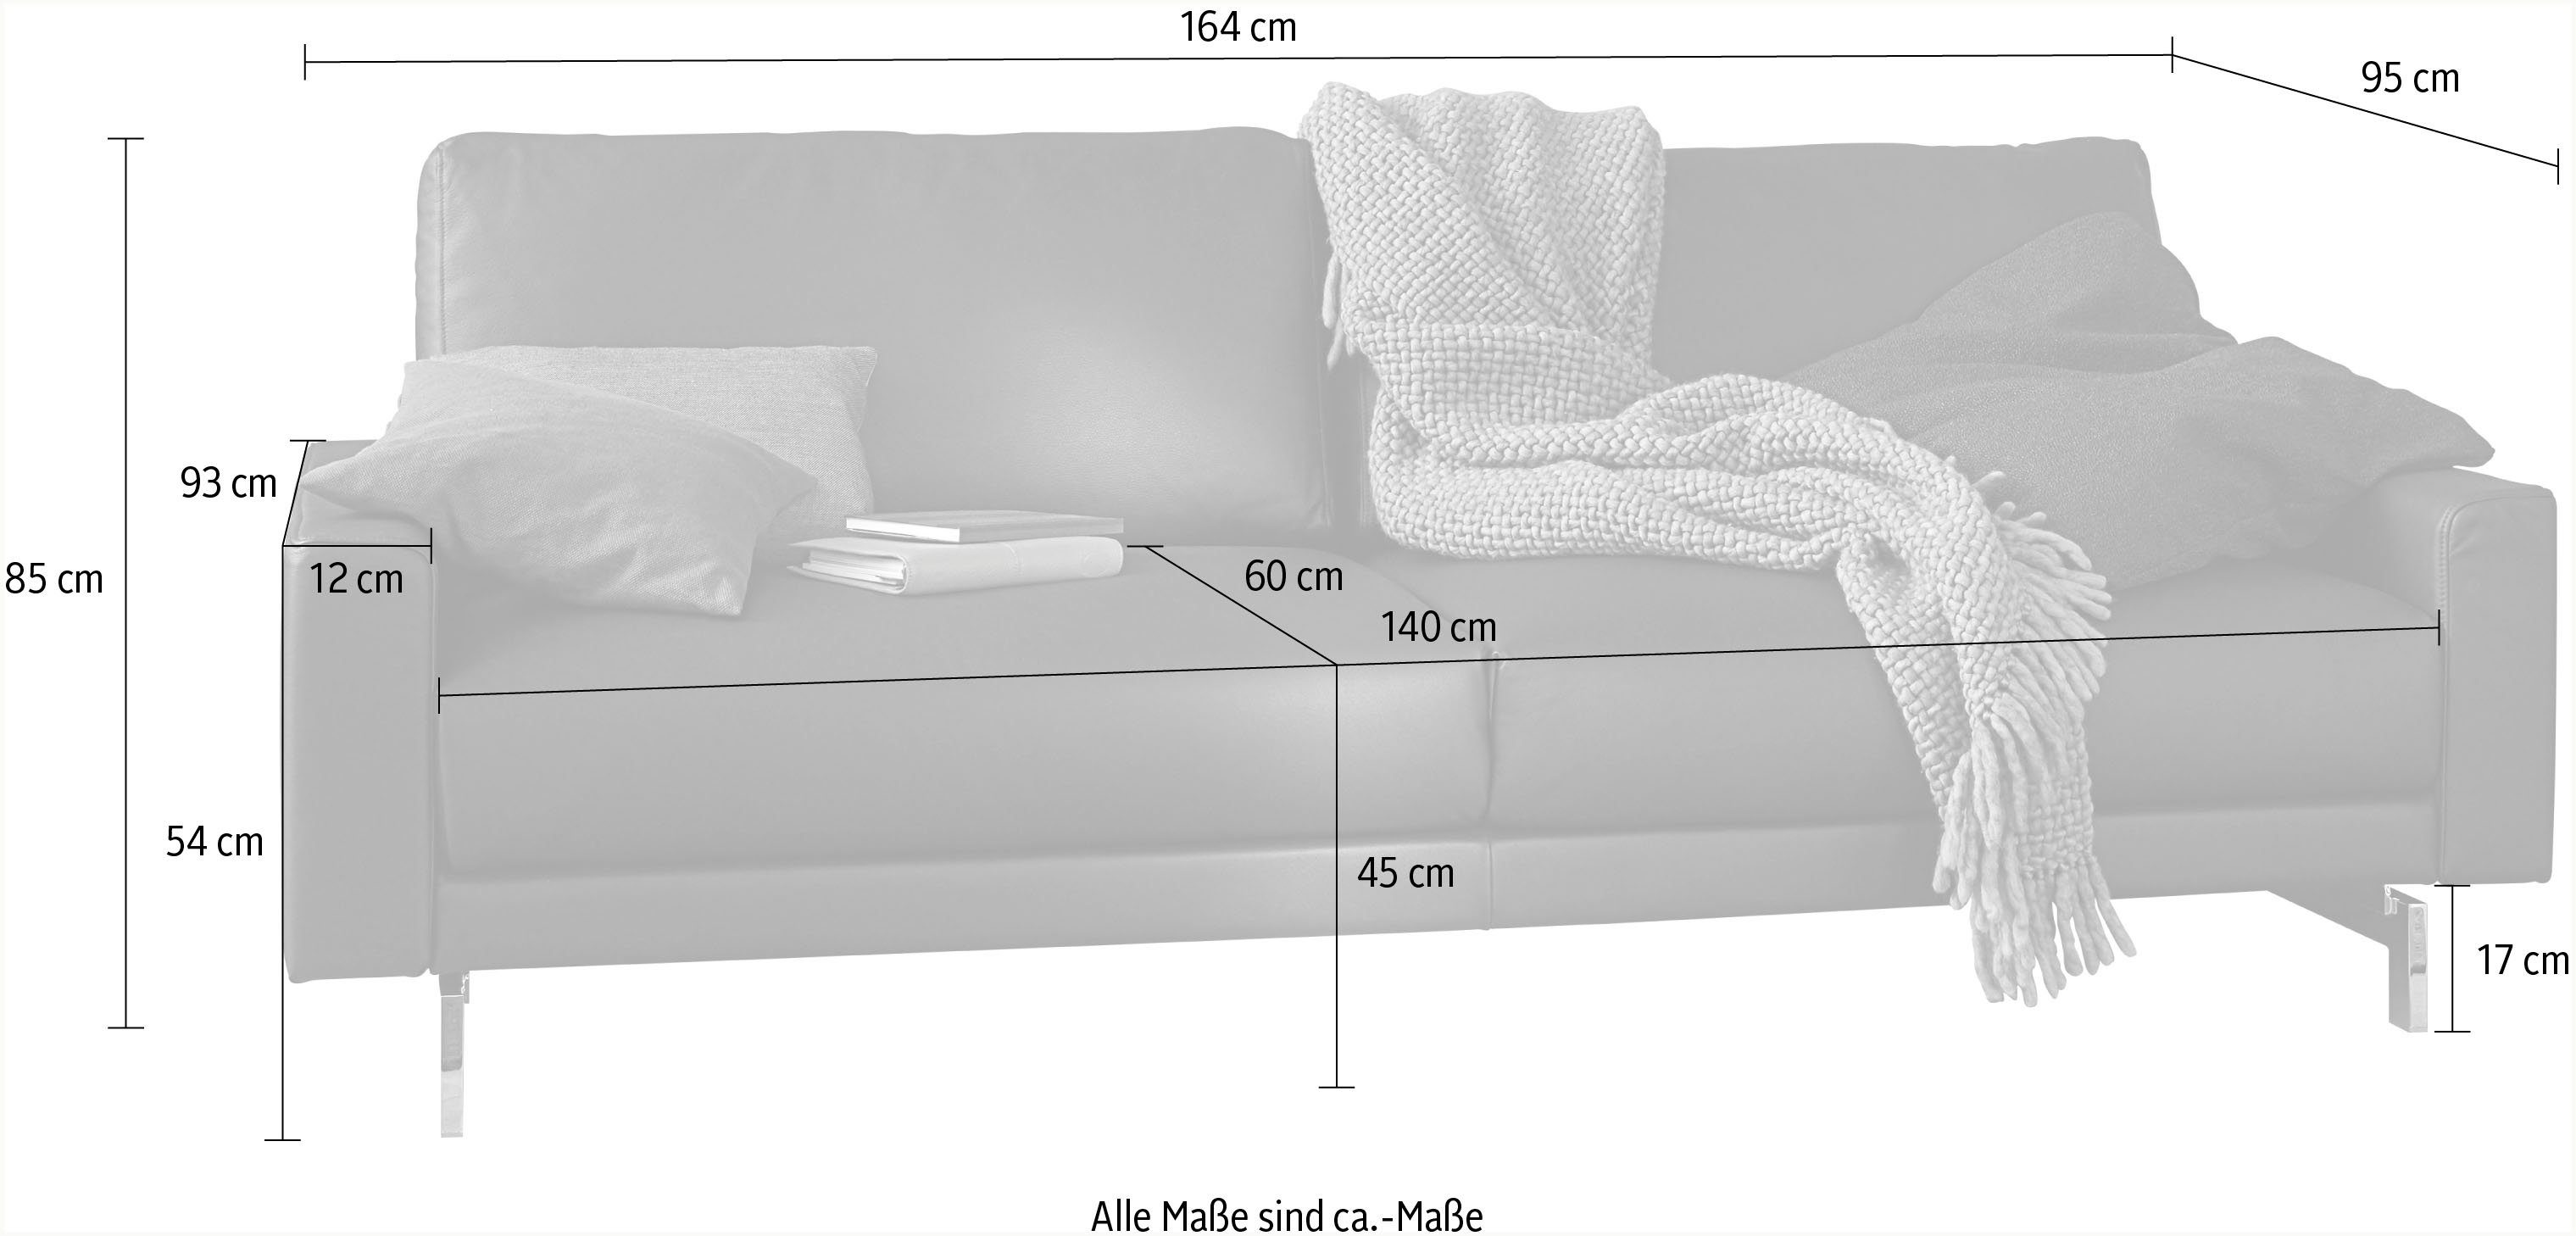 hülsta sofa 2-Sitzer hs.450, Armlehne cm Fuß niedrig, chromfarben glänzend, Breite 164